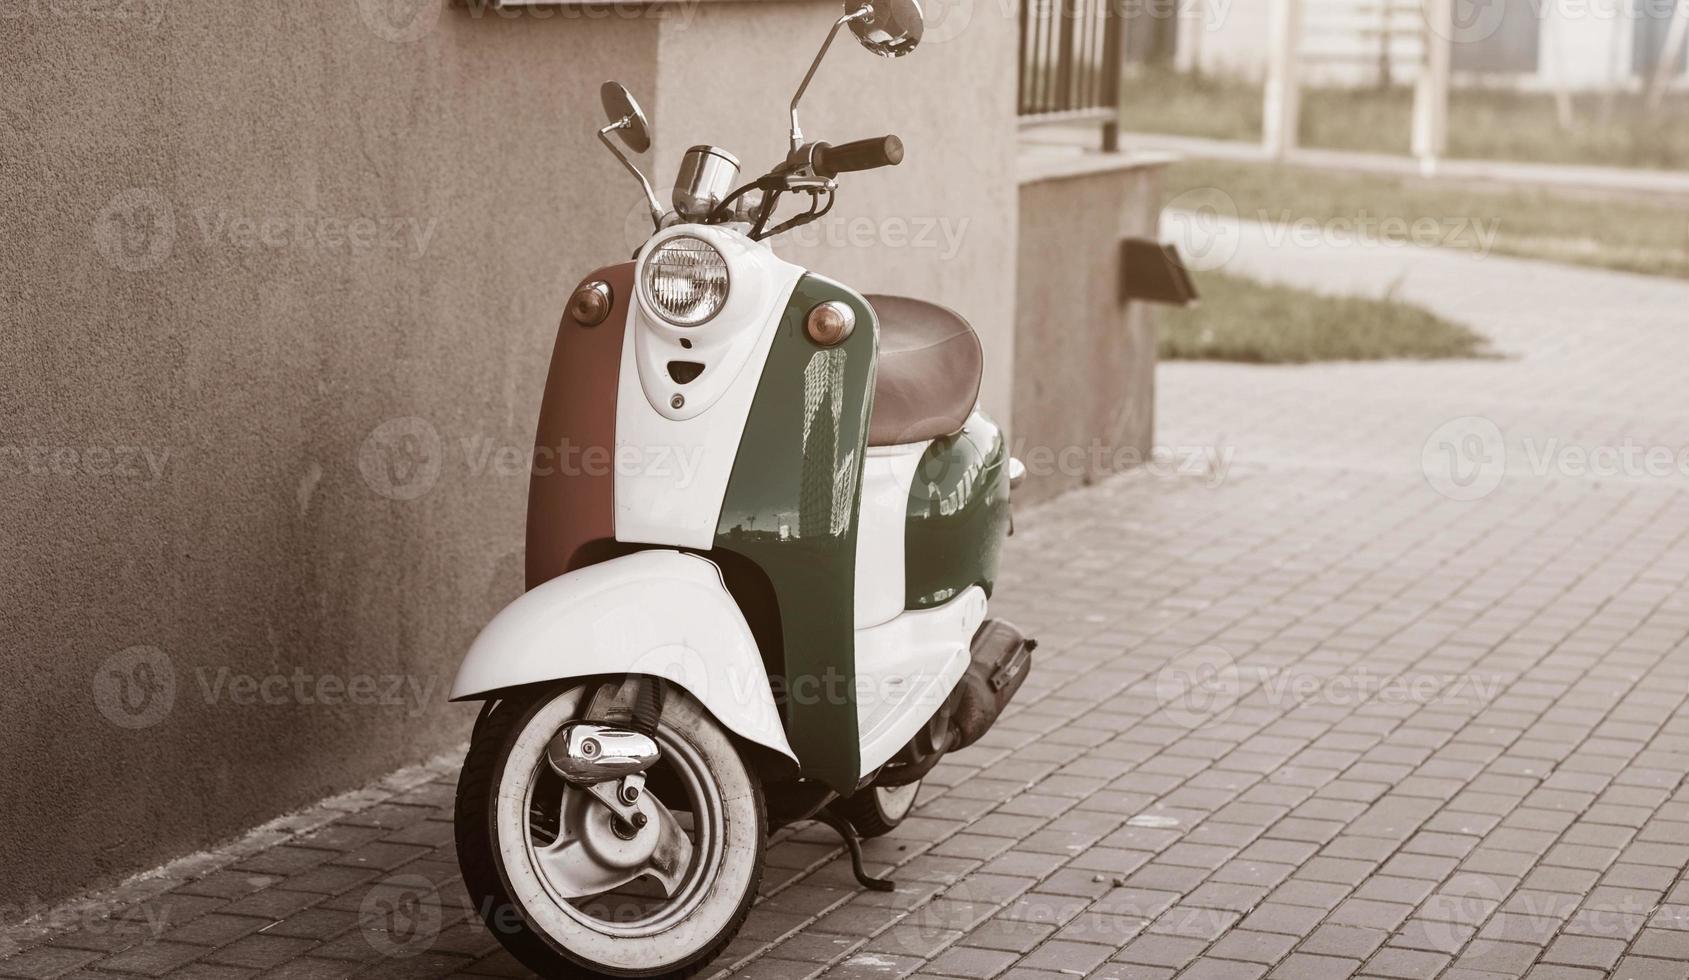 vintage scooter in stadsstraat foto